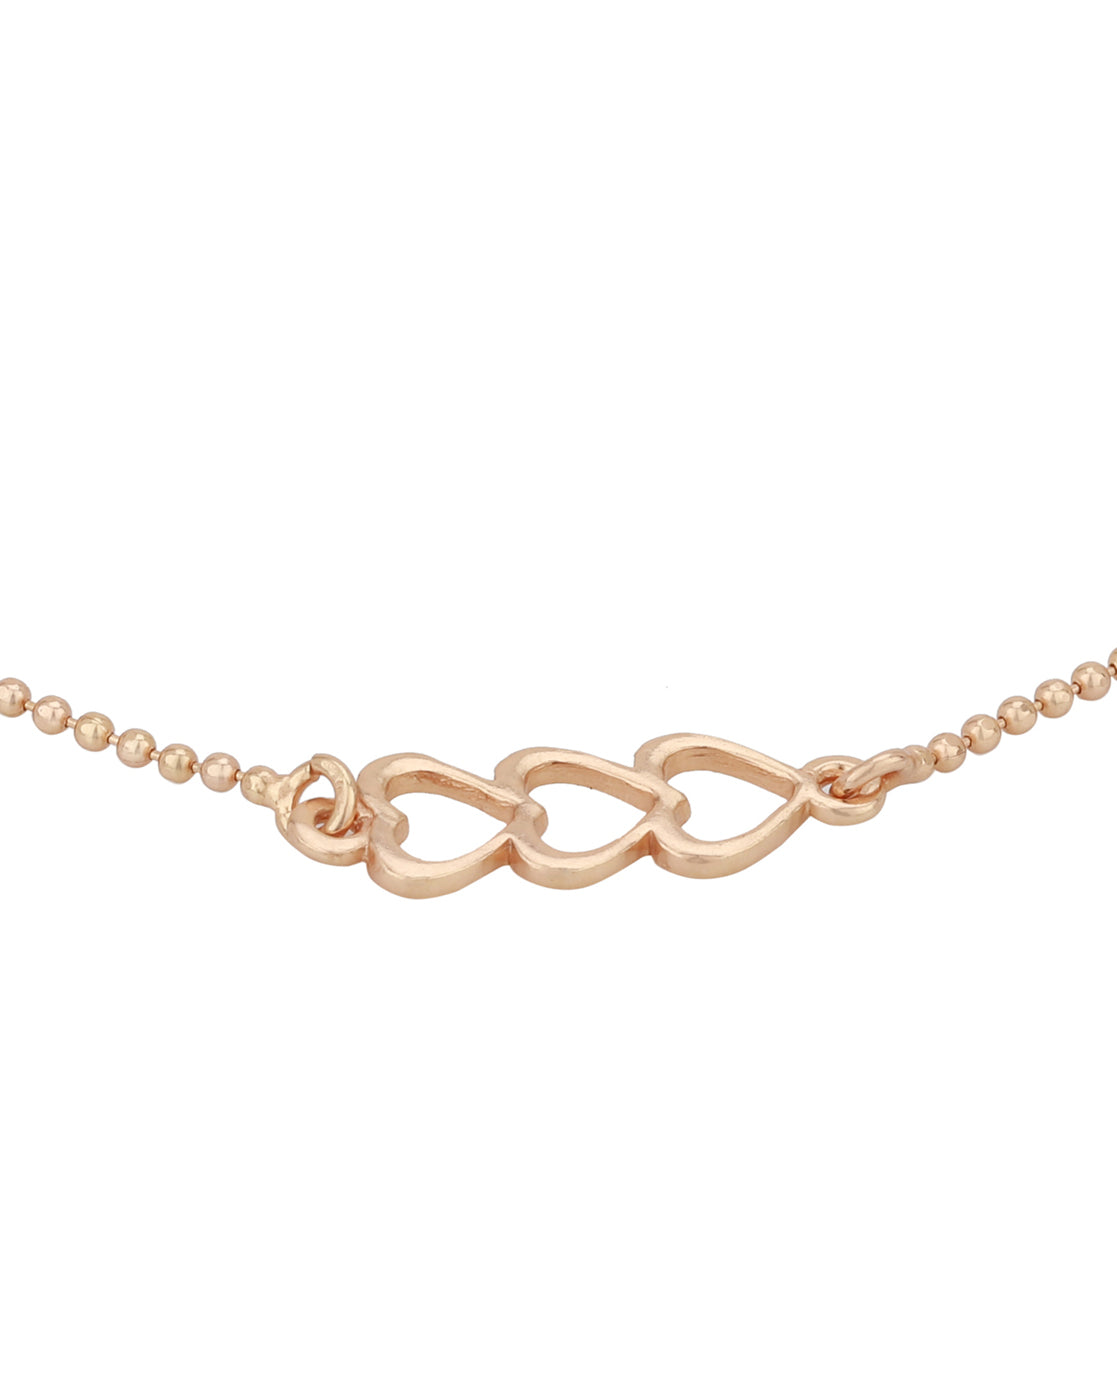 Get Gold-Toned Heart Shaped Charm Bracelet at ₹ 649 | LBB Shop